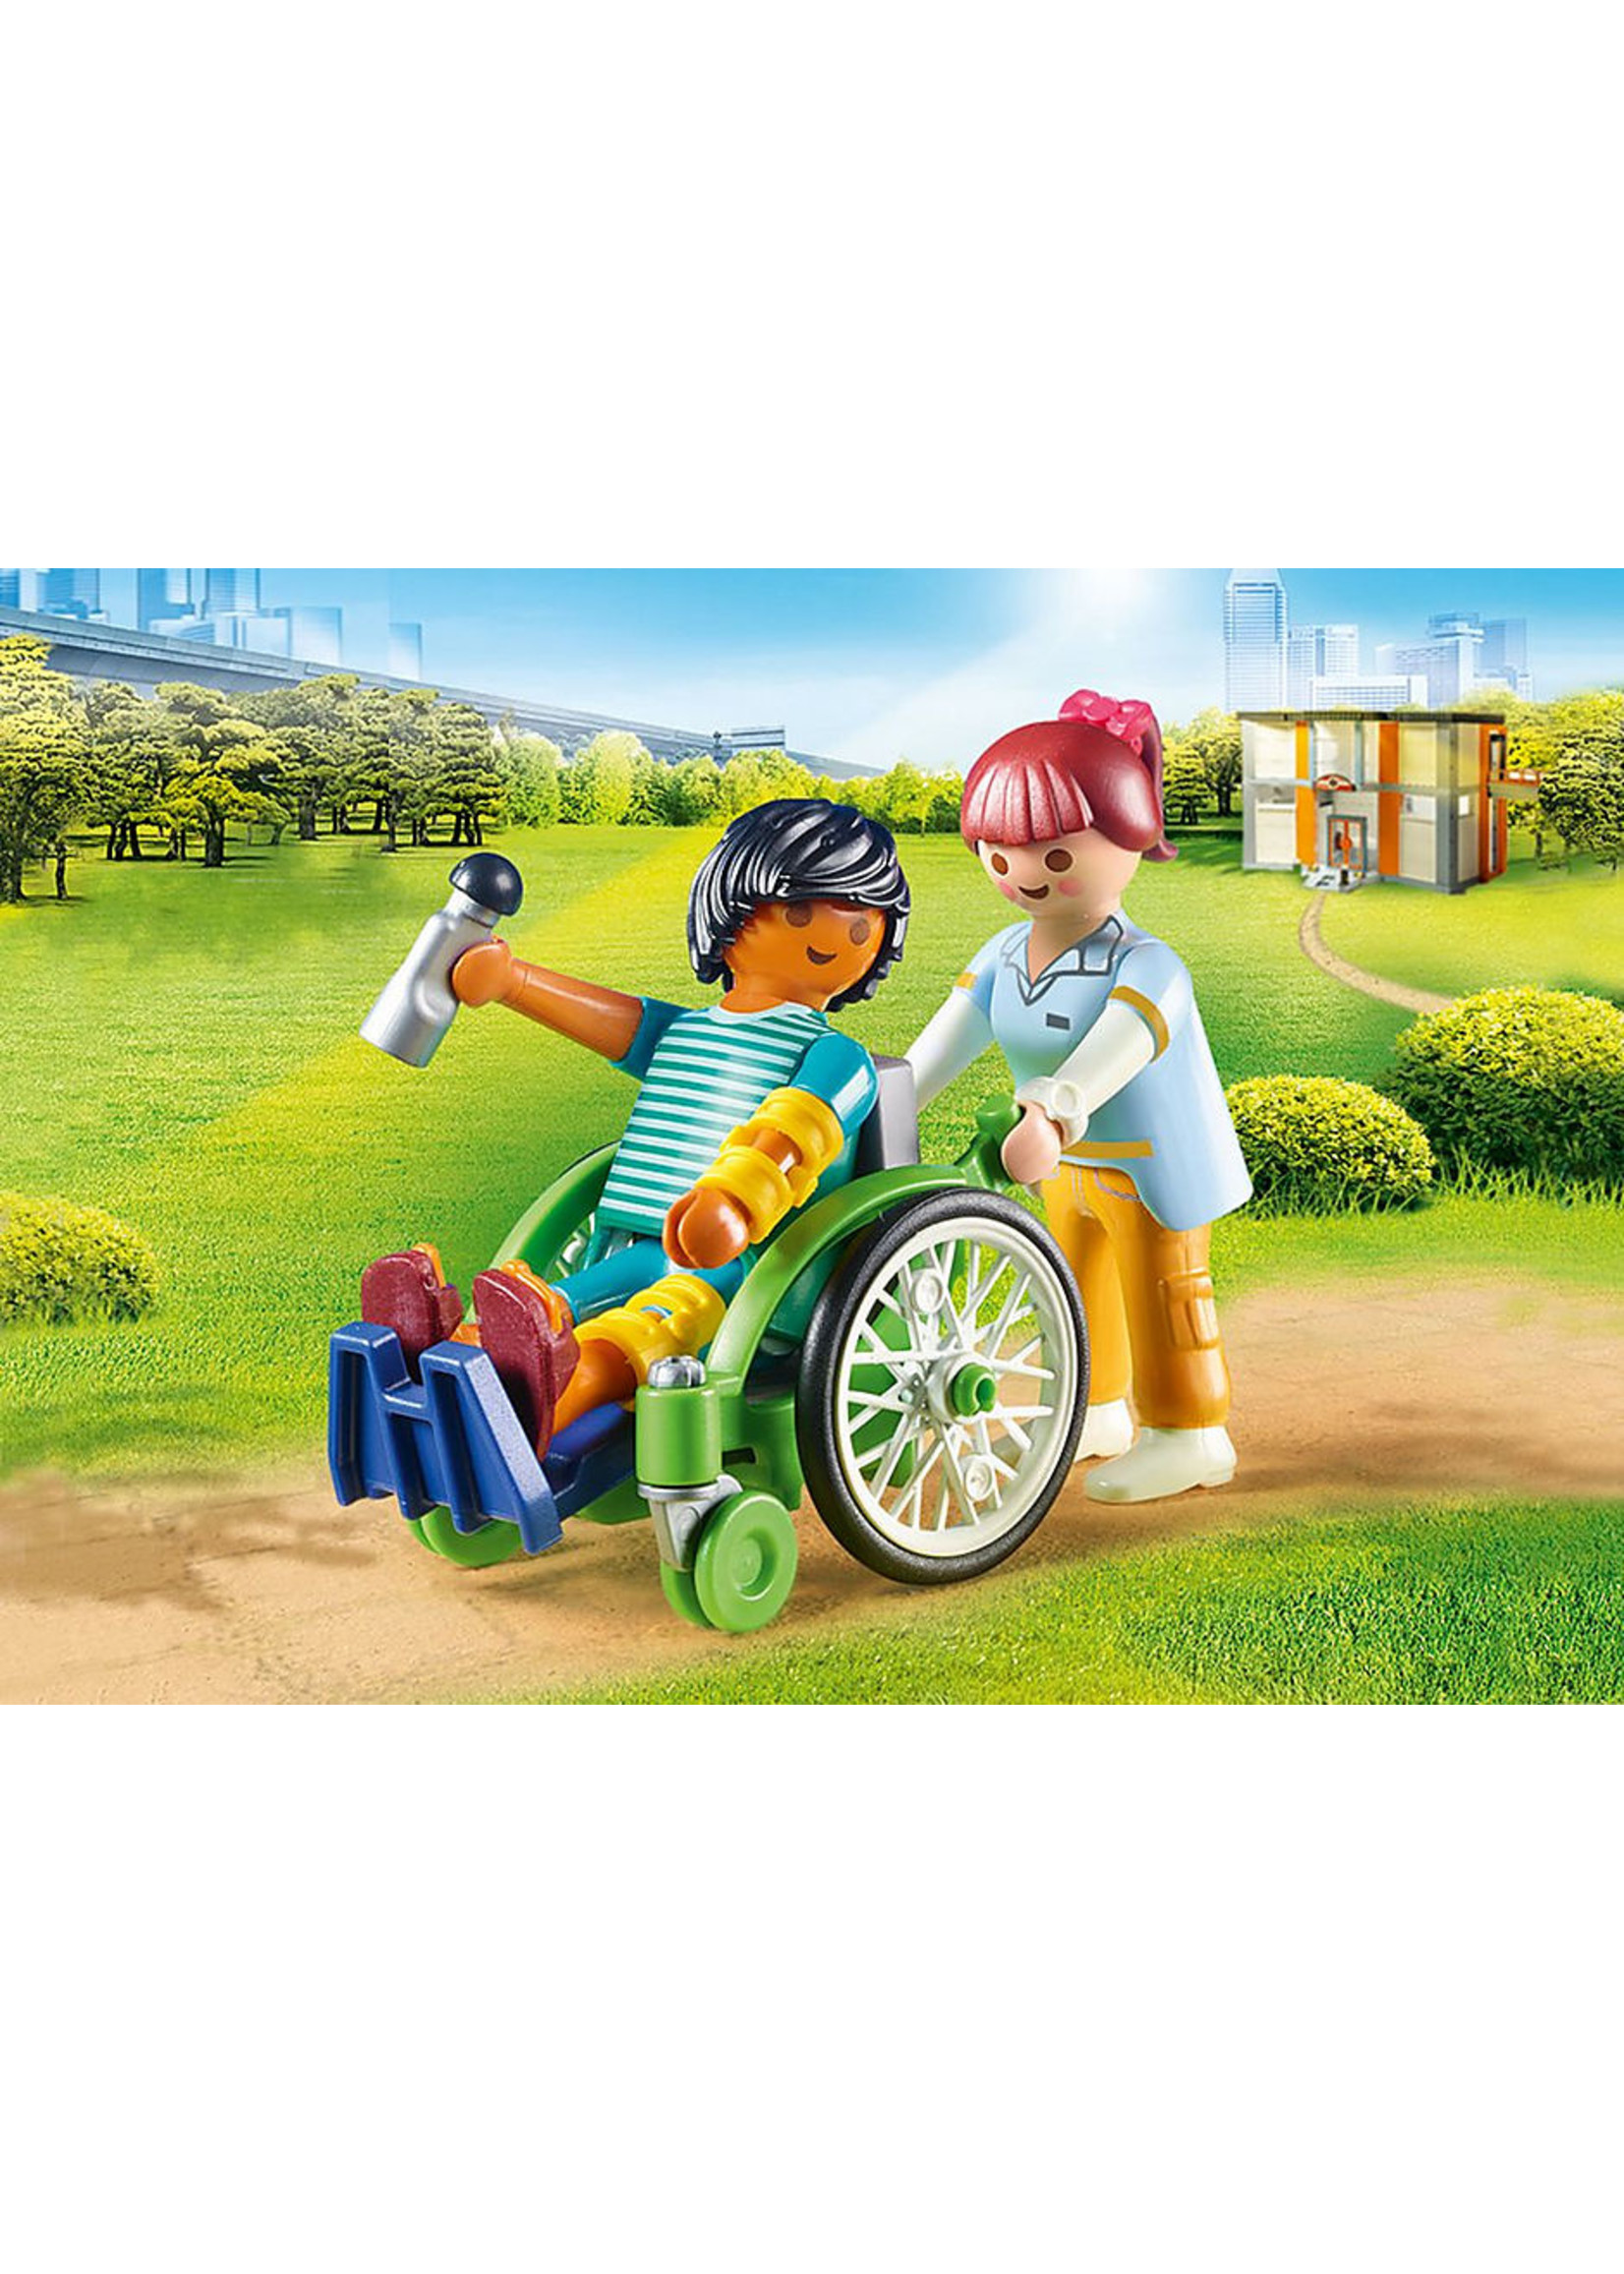 Playmobil Patient in Wheelchair